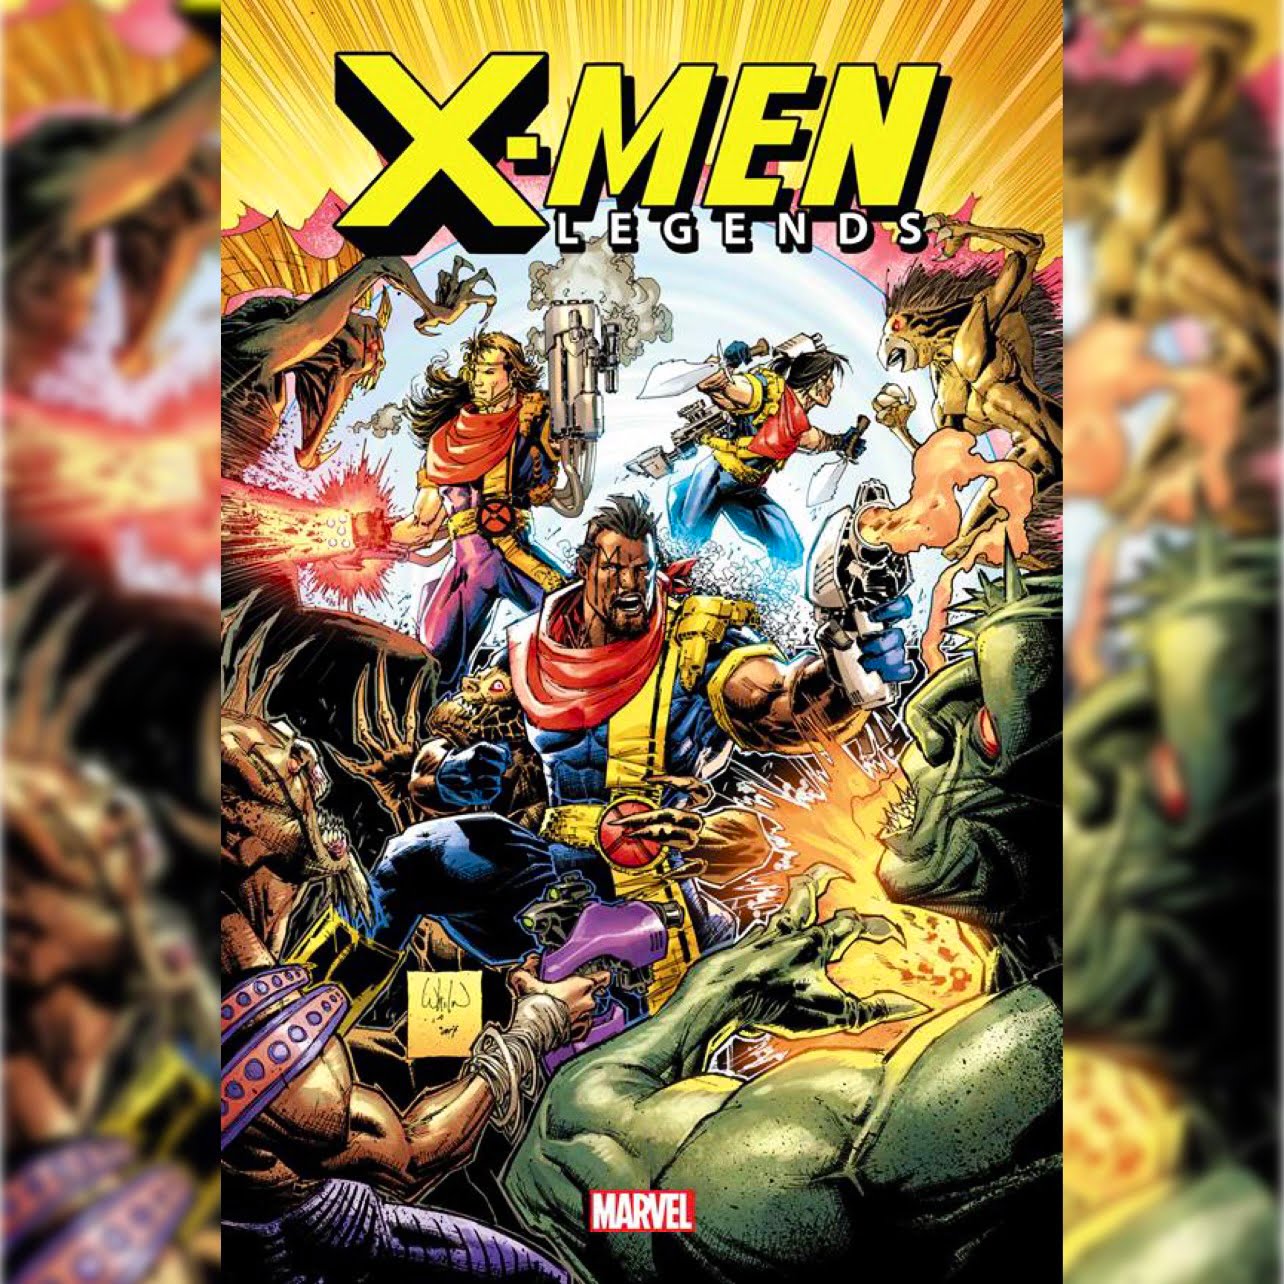 X-MEN LEGENDS by Marvel via 360 MAGAZINE